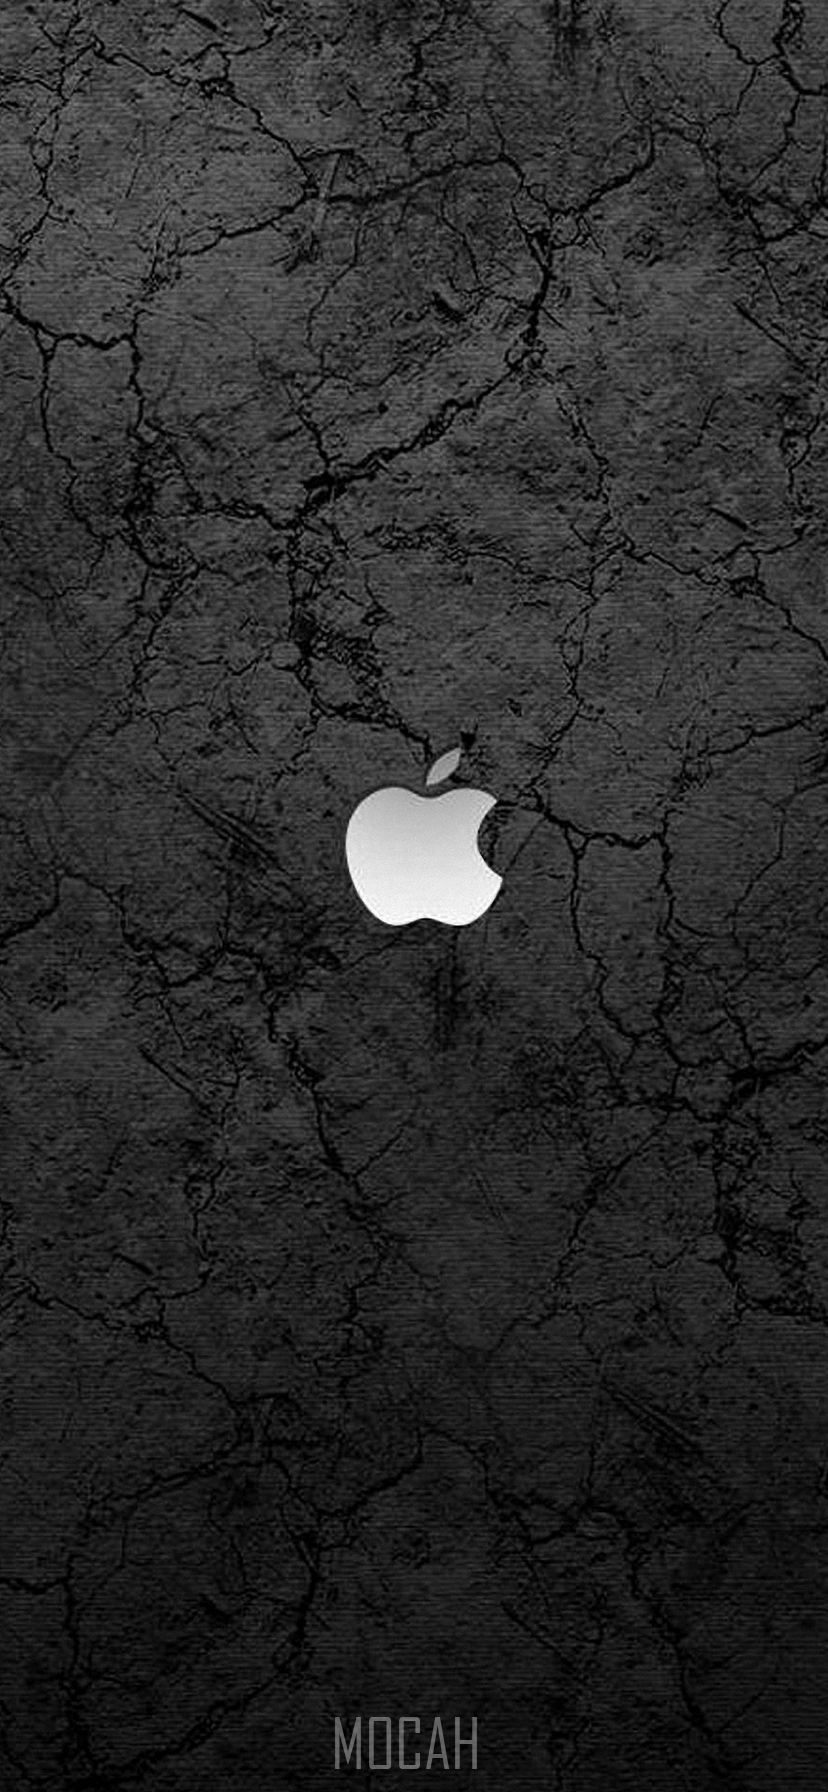 Apple, Black, Light, Tree, Darkness, Apple iPhone XR wallpaper free download, 828x1792. Mocah HD Wallpaper